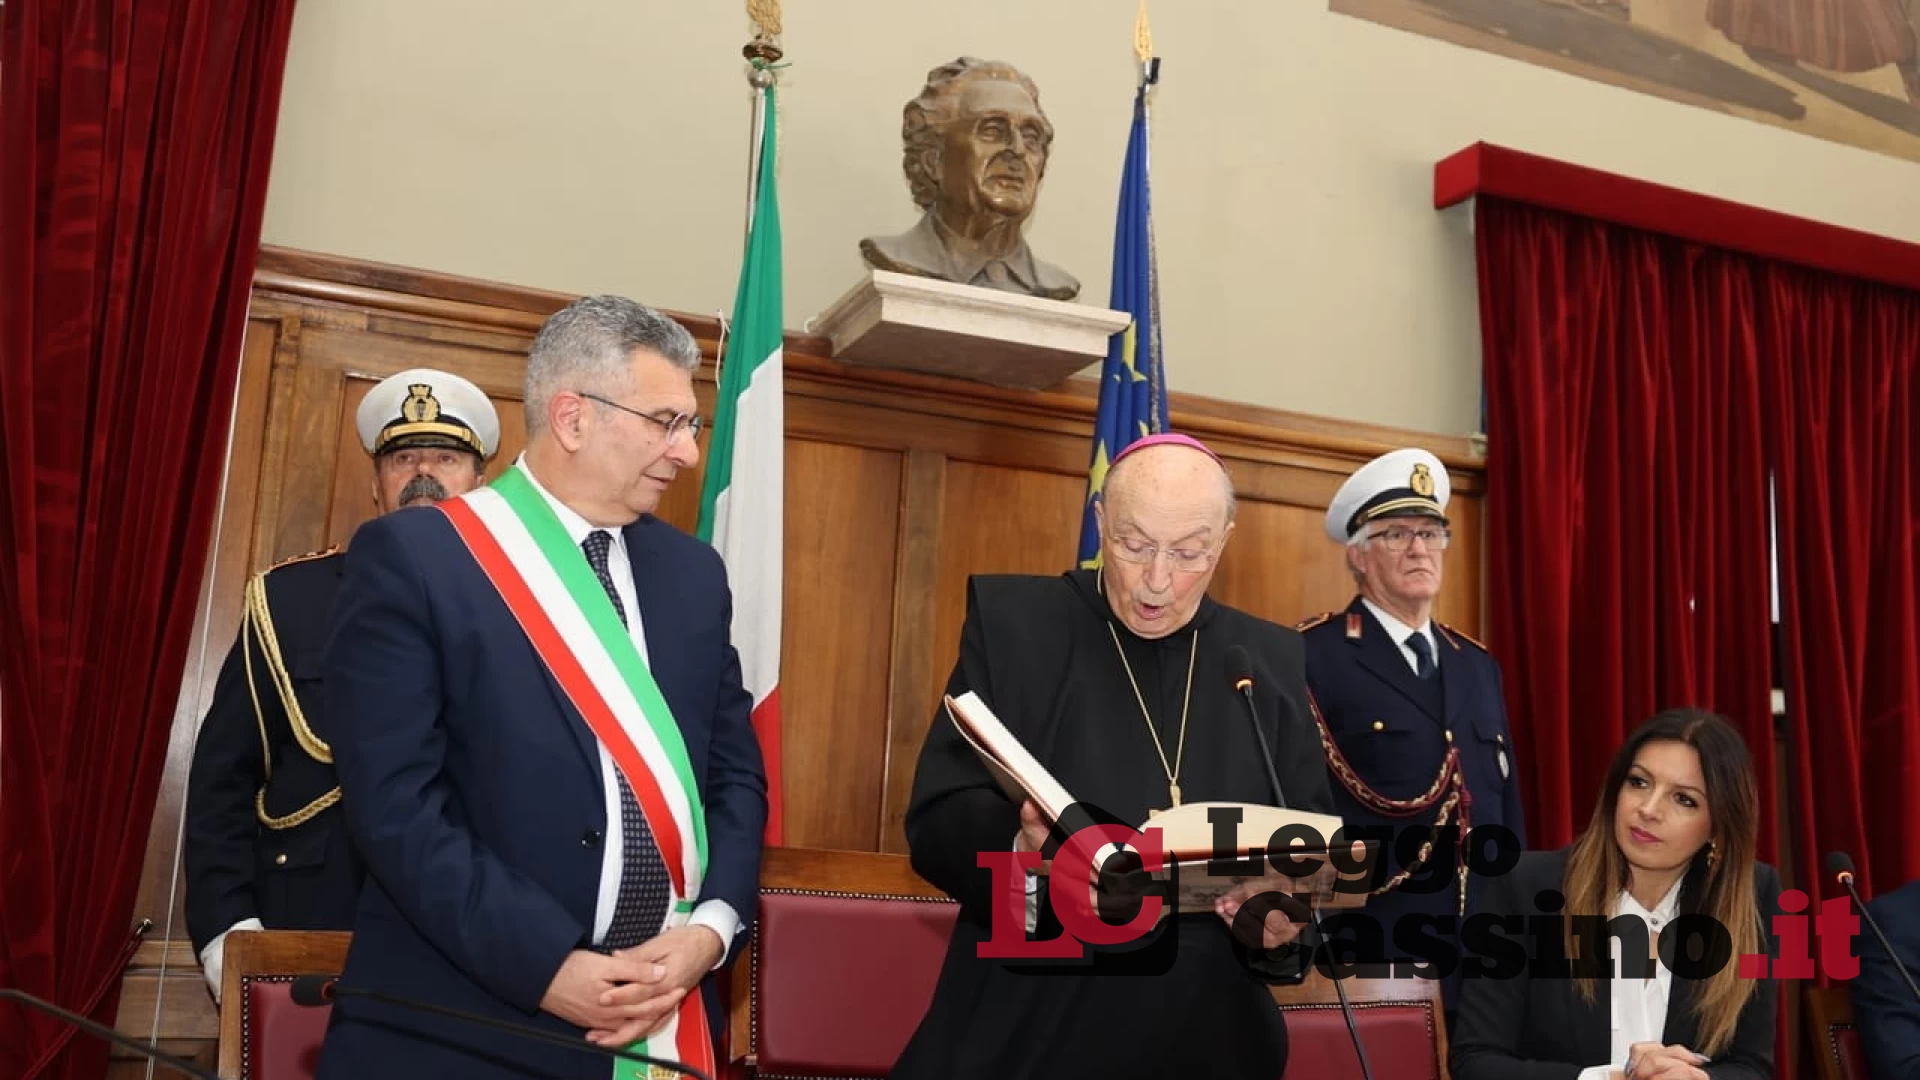 Conferita la cittadinanza onoraria all'ex abate Bernardo D'Onorio